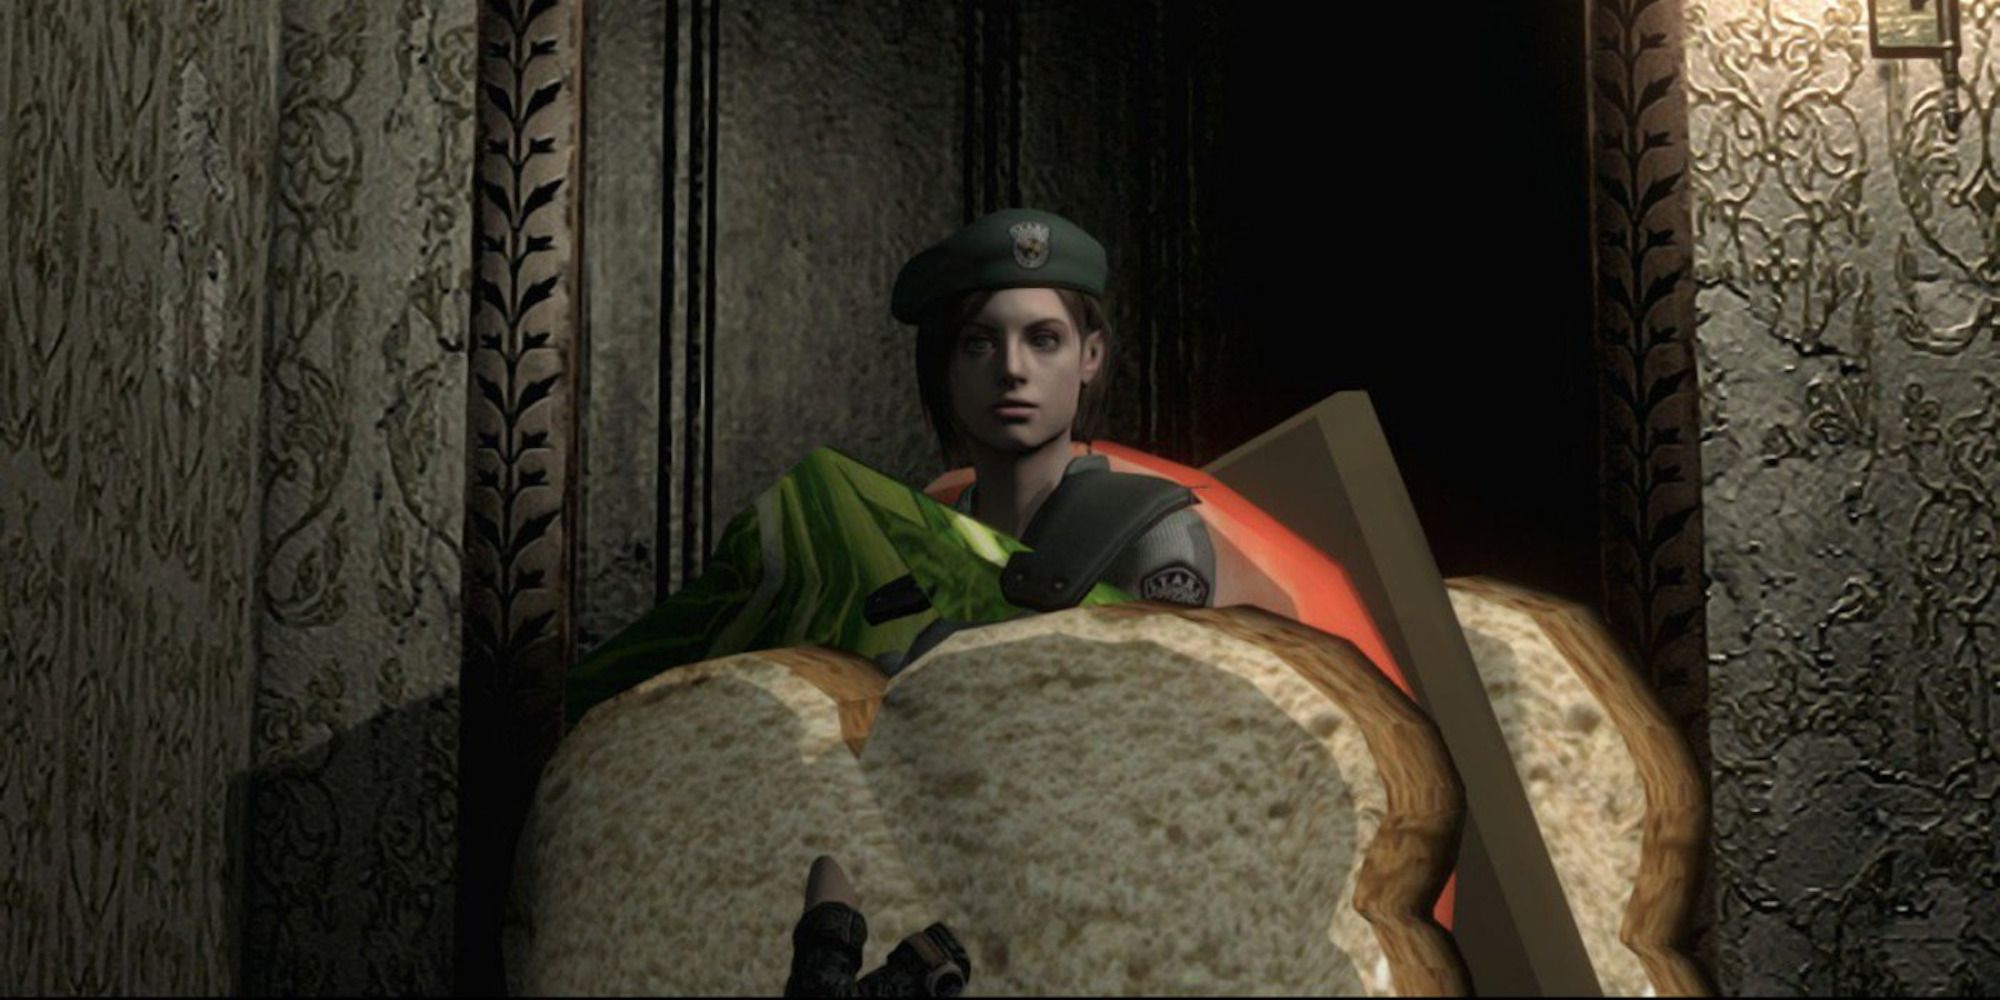 A mod featuring Jill from Resident Evil 